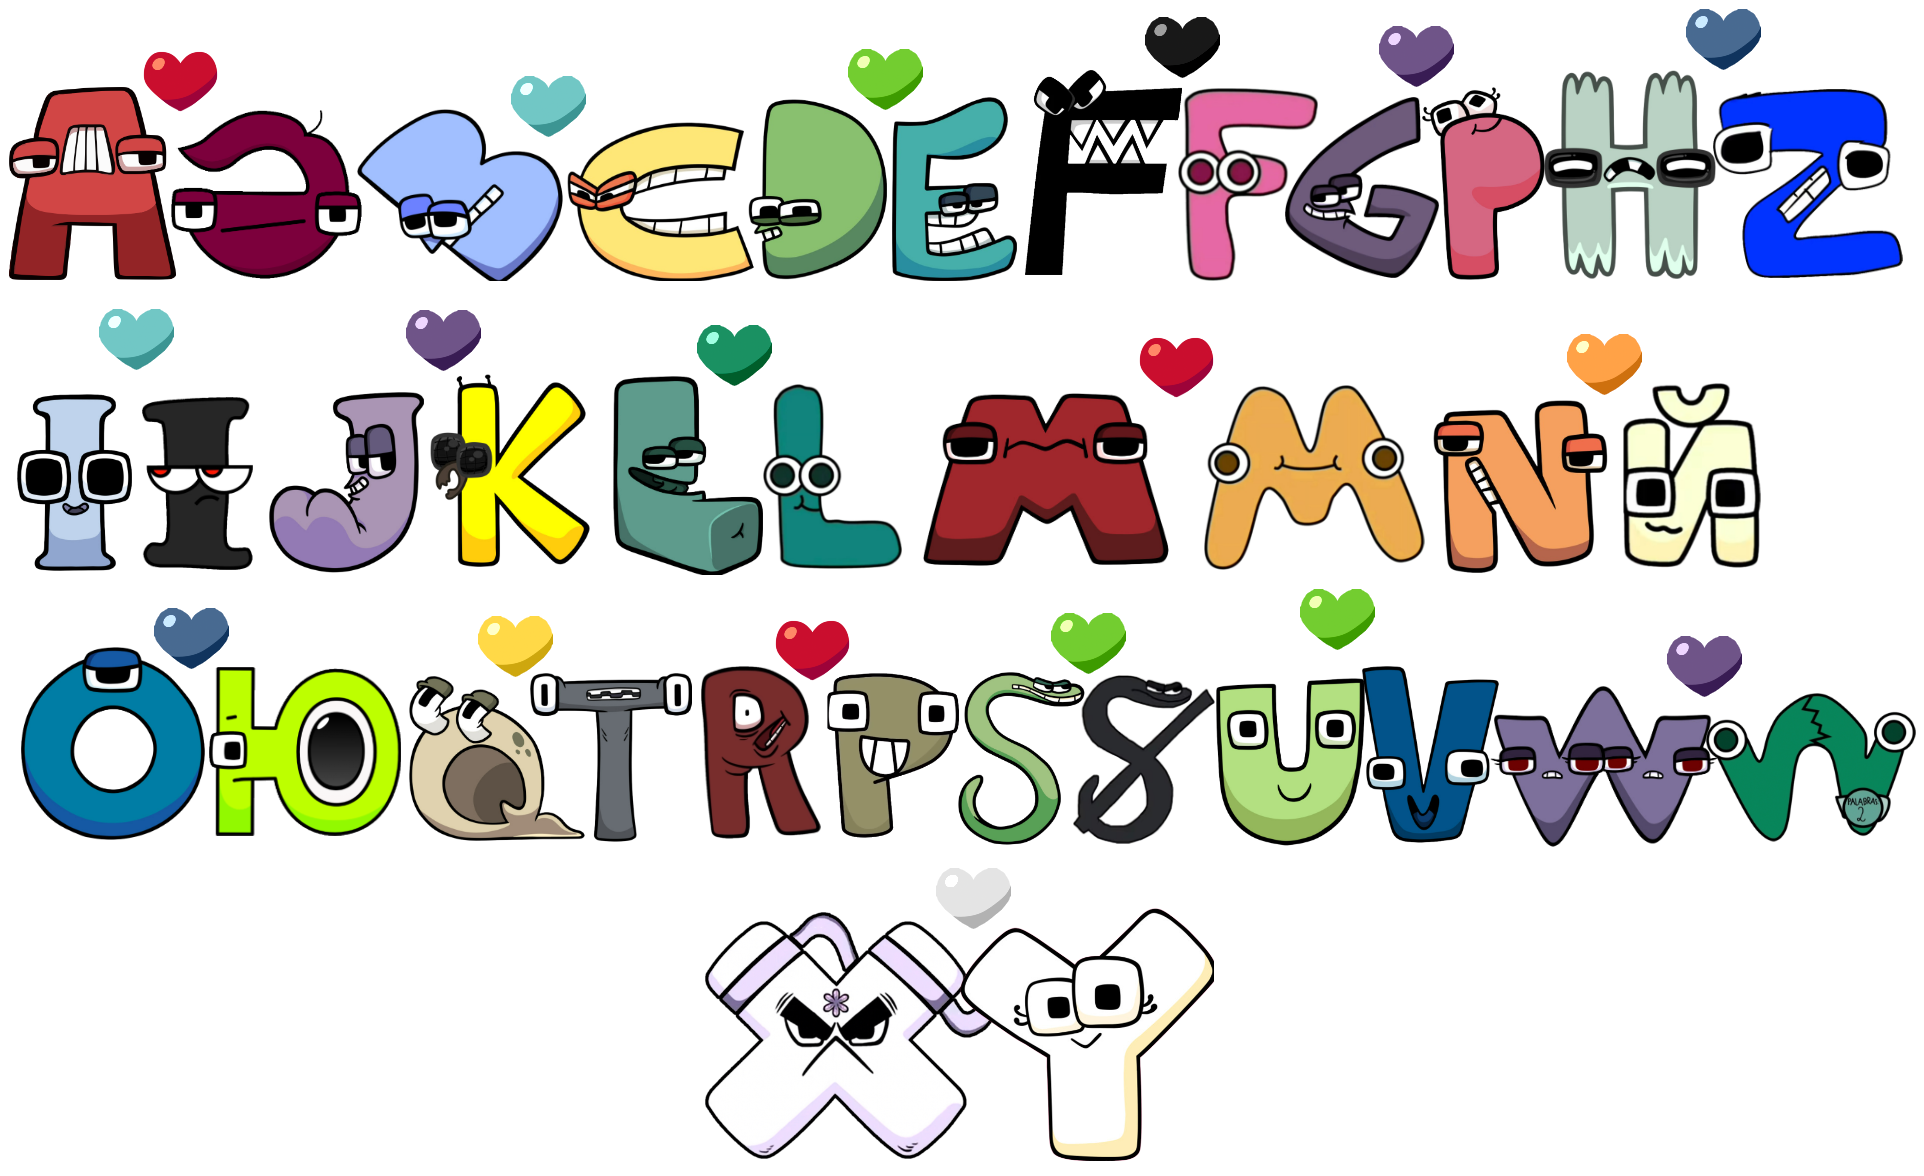 all alphabet lore ships (lowercase) : r/alphabetfriends